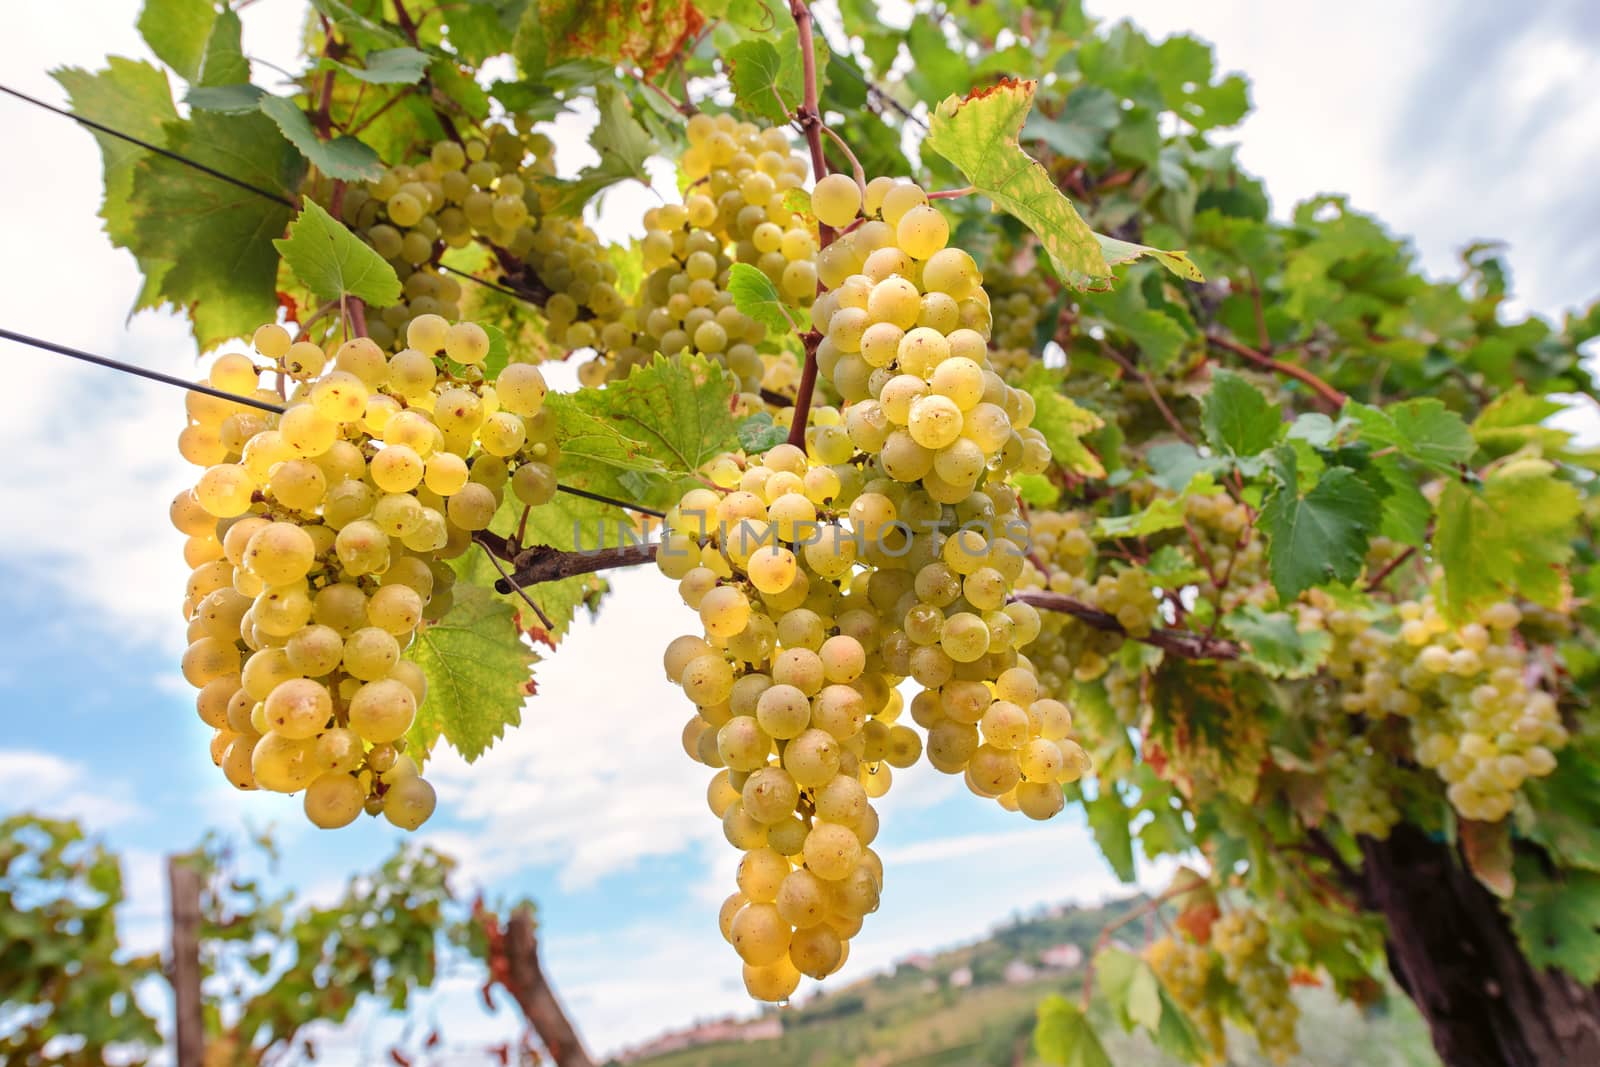 White grapes hanging from vine with blurred vineyard background, Gorska Brda, Slovenia